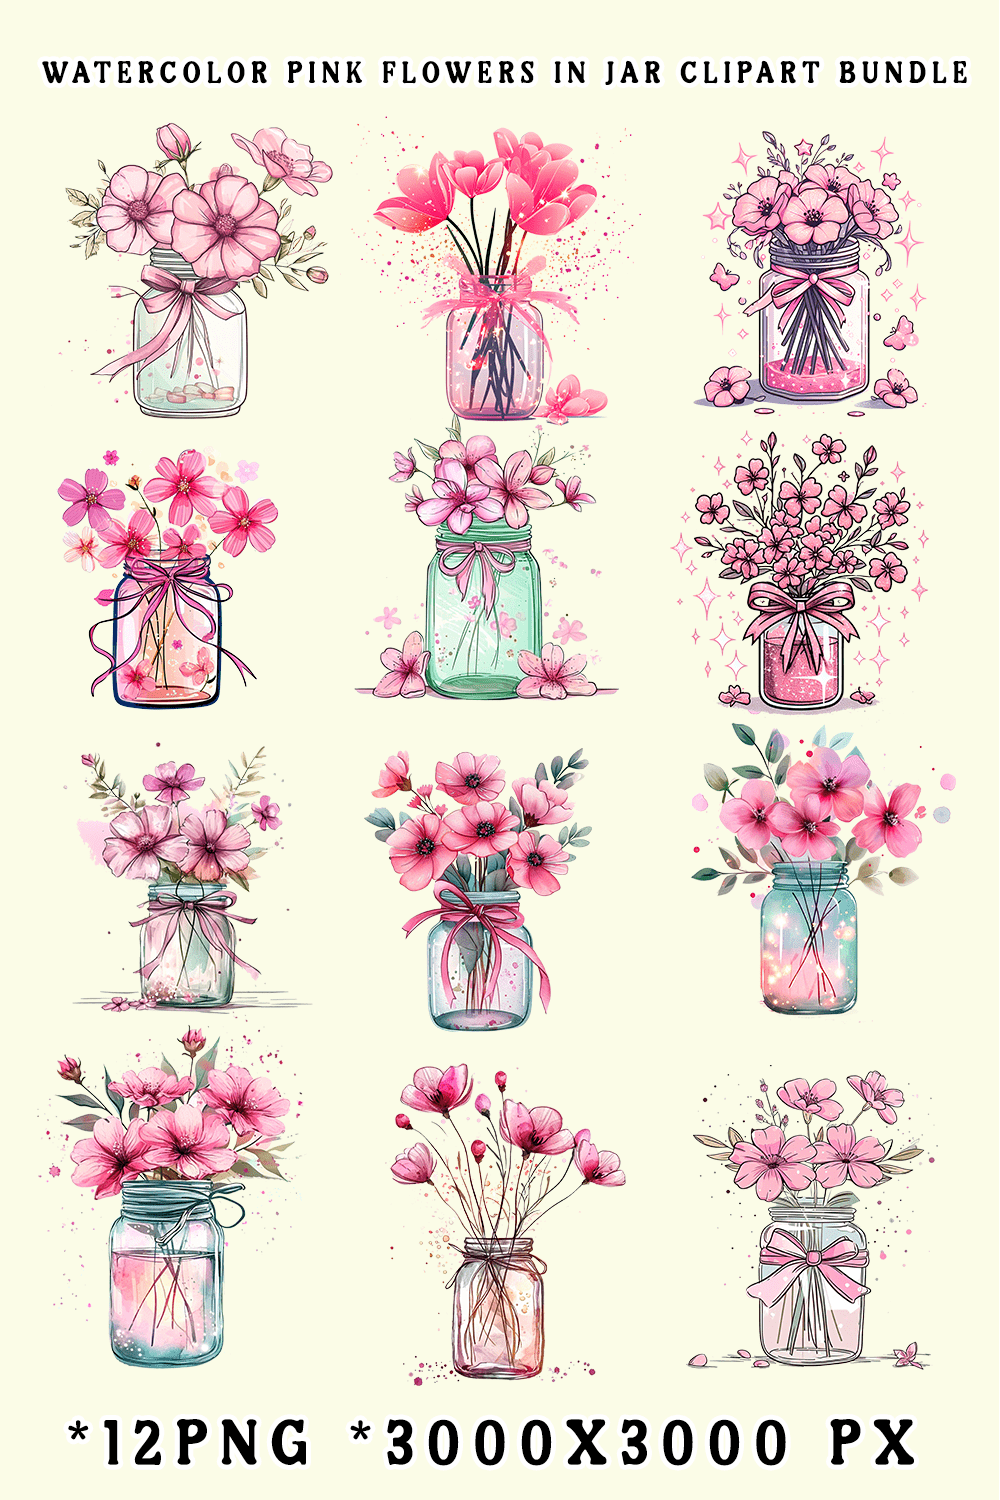 Watercolor Pink Flowers in Jar Clipart Bundle pinterest preview image.